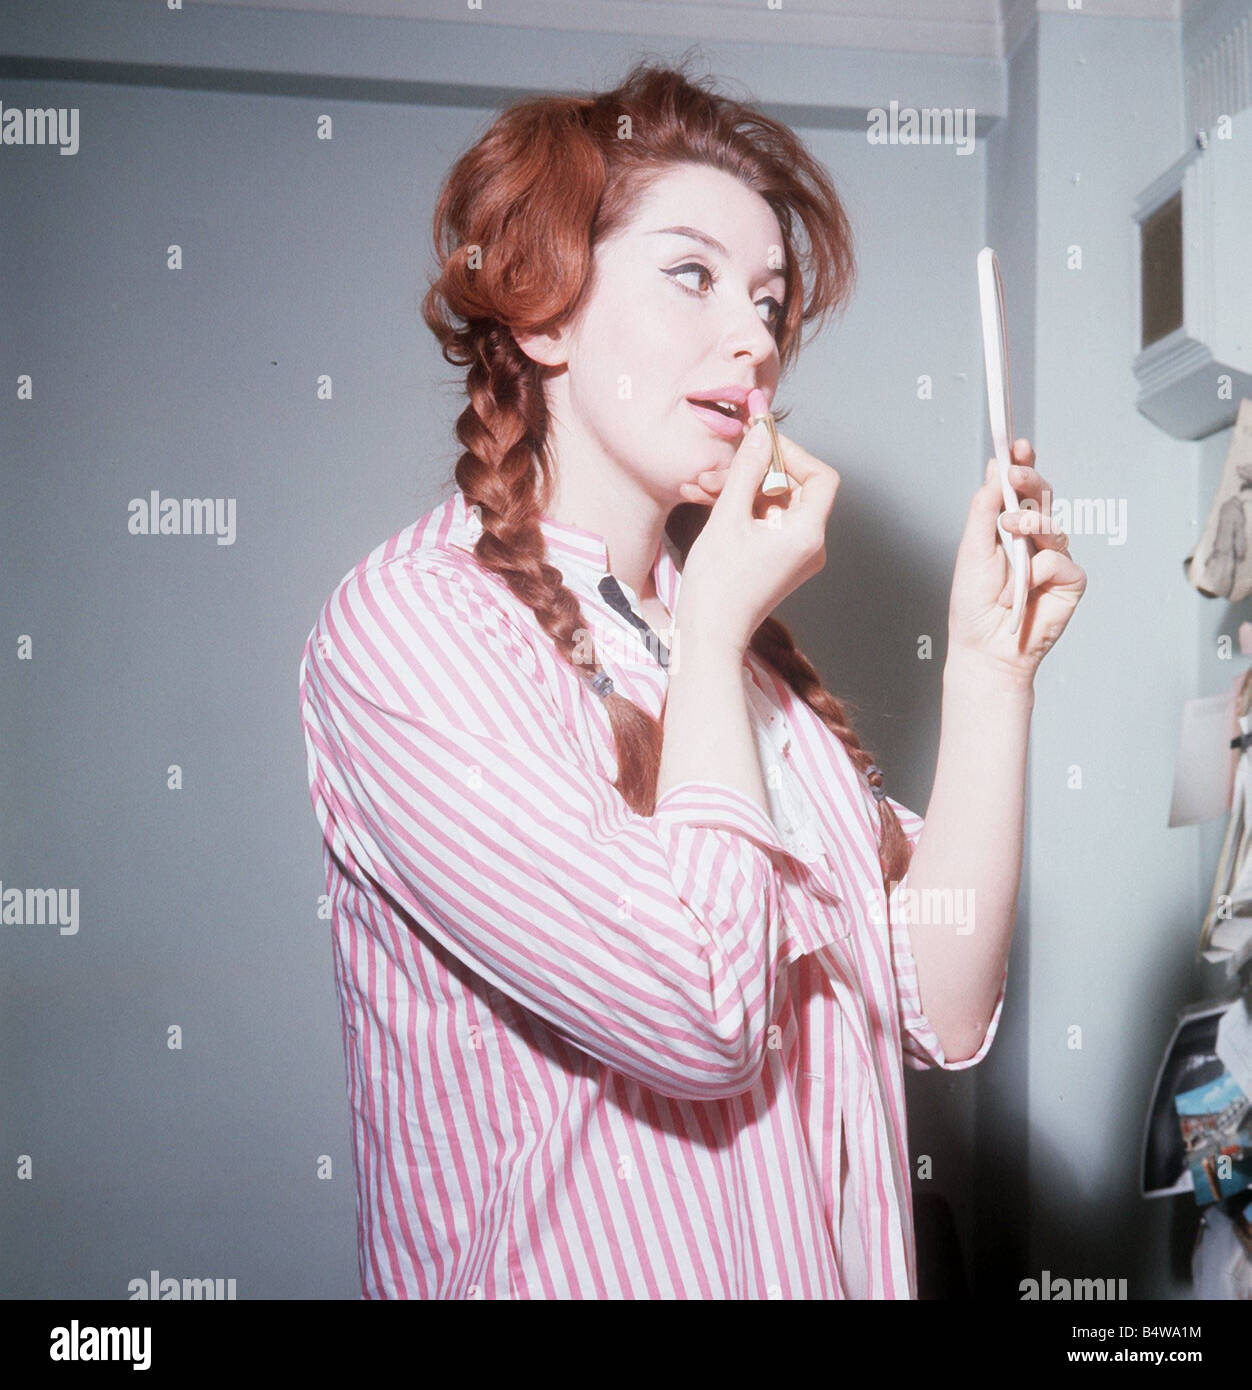 Heller Toren actrice modèle 1964 puting sur lipstick holding hand mirror  chemise rayée rose Photo Stock - Alamy